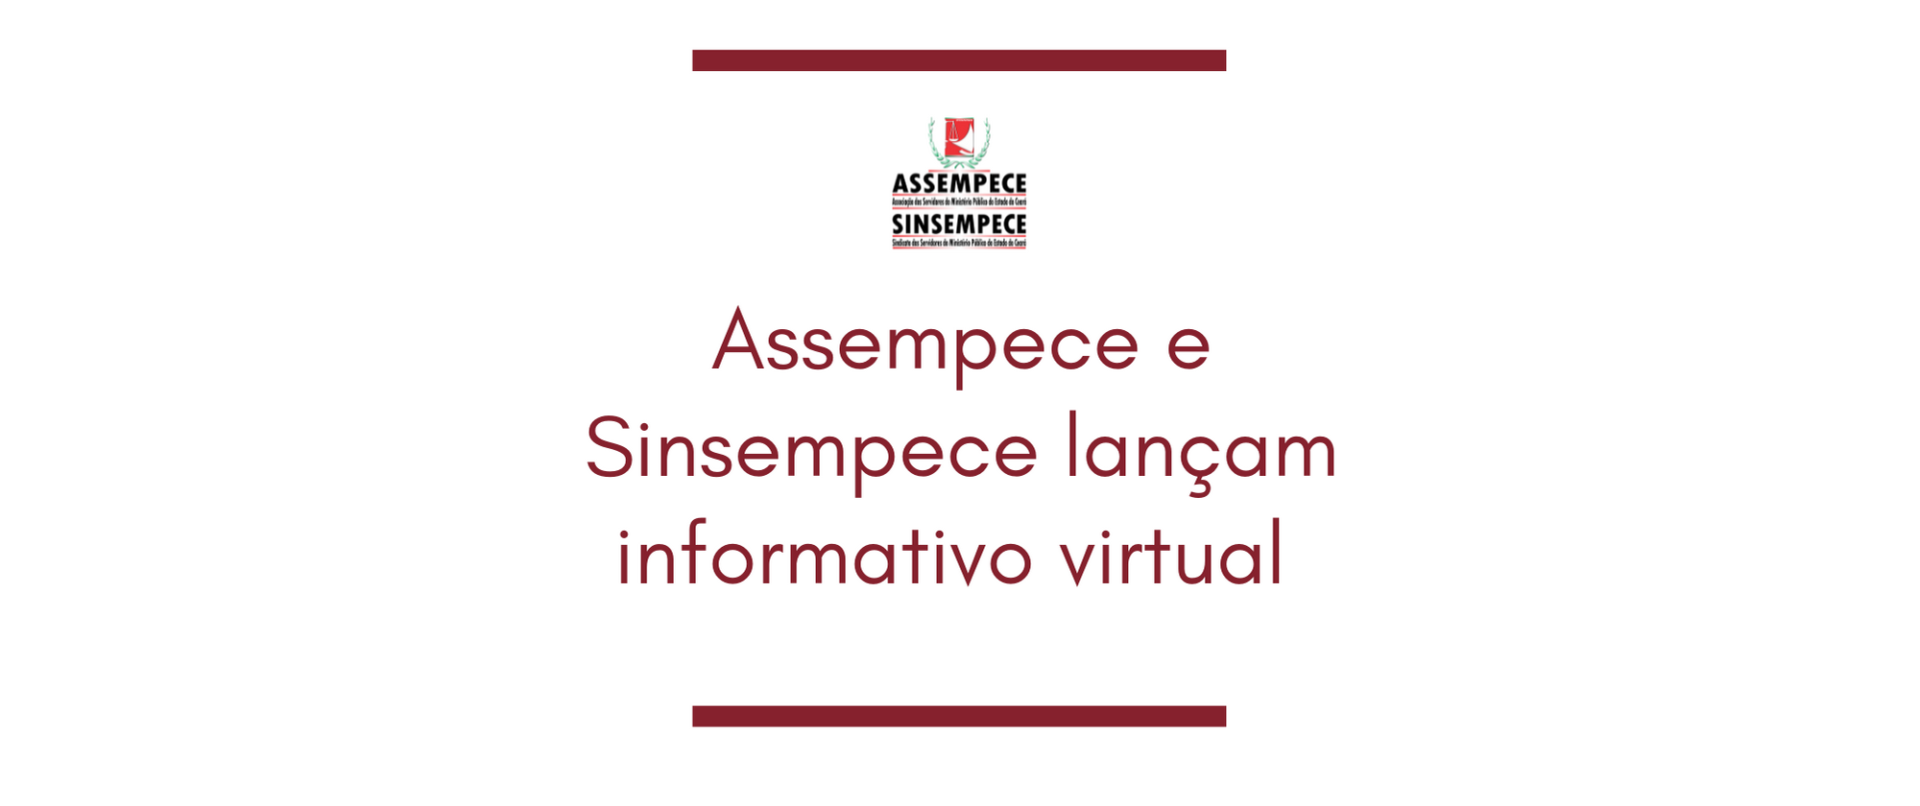 Assempece e Sinsempece lançam informativo virtual